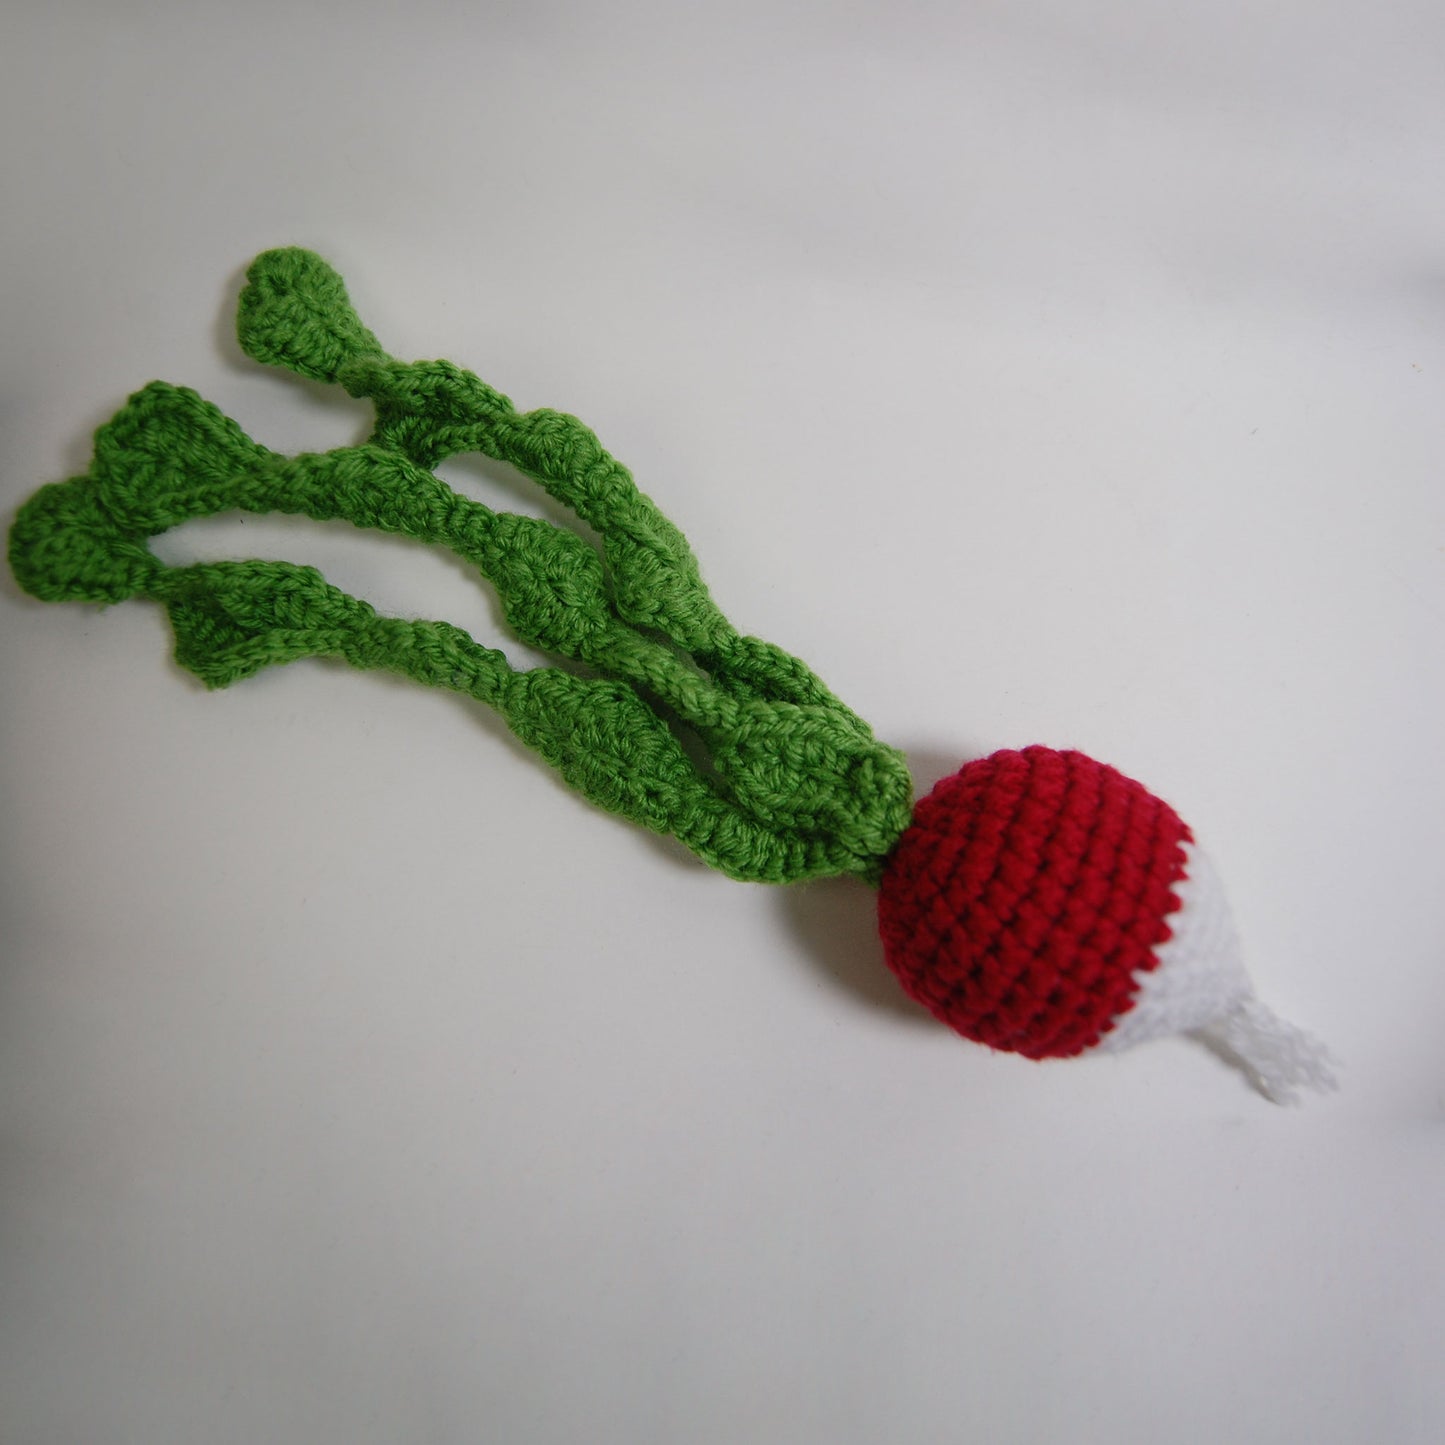 Radish Crochet Pattern